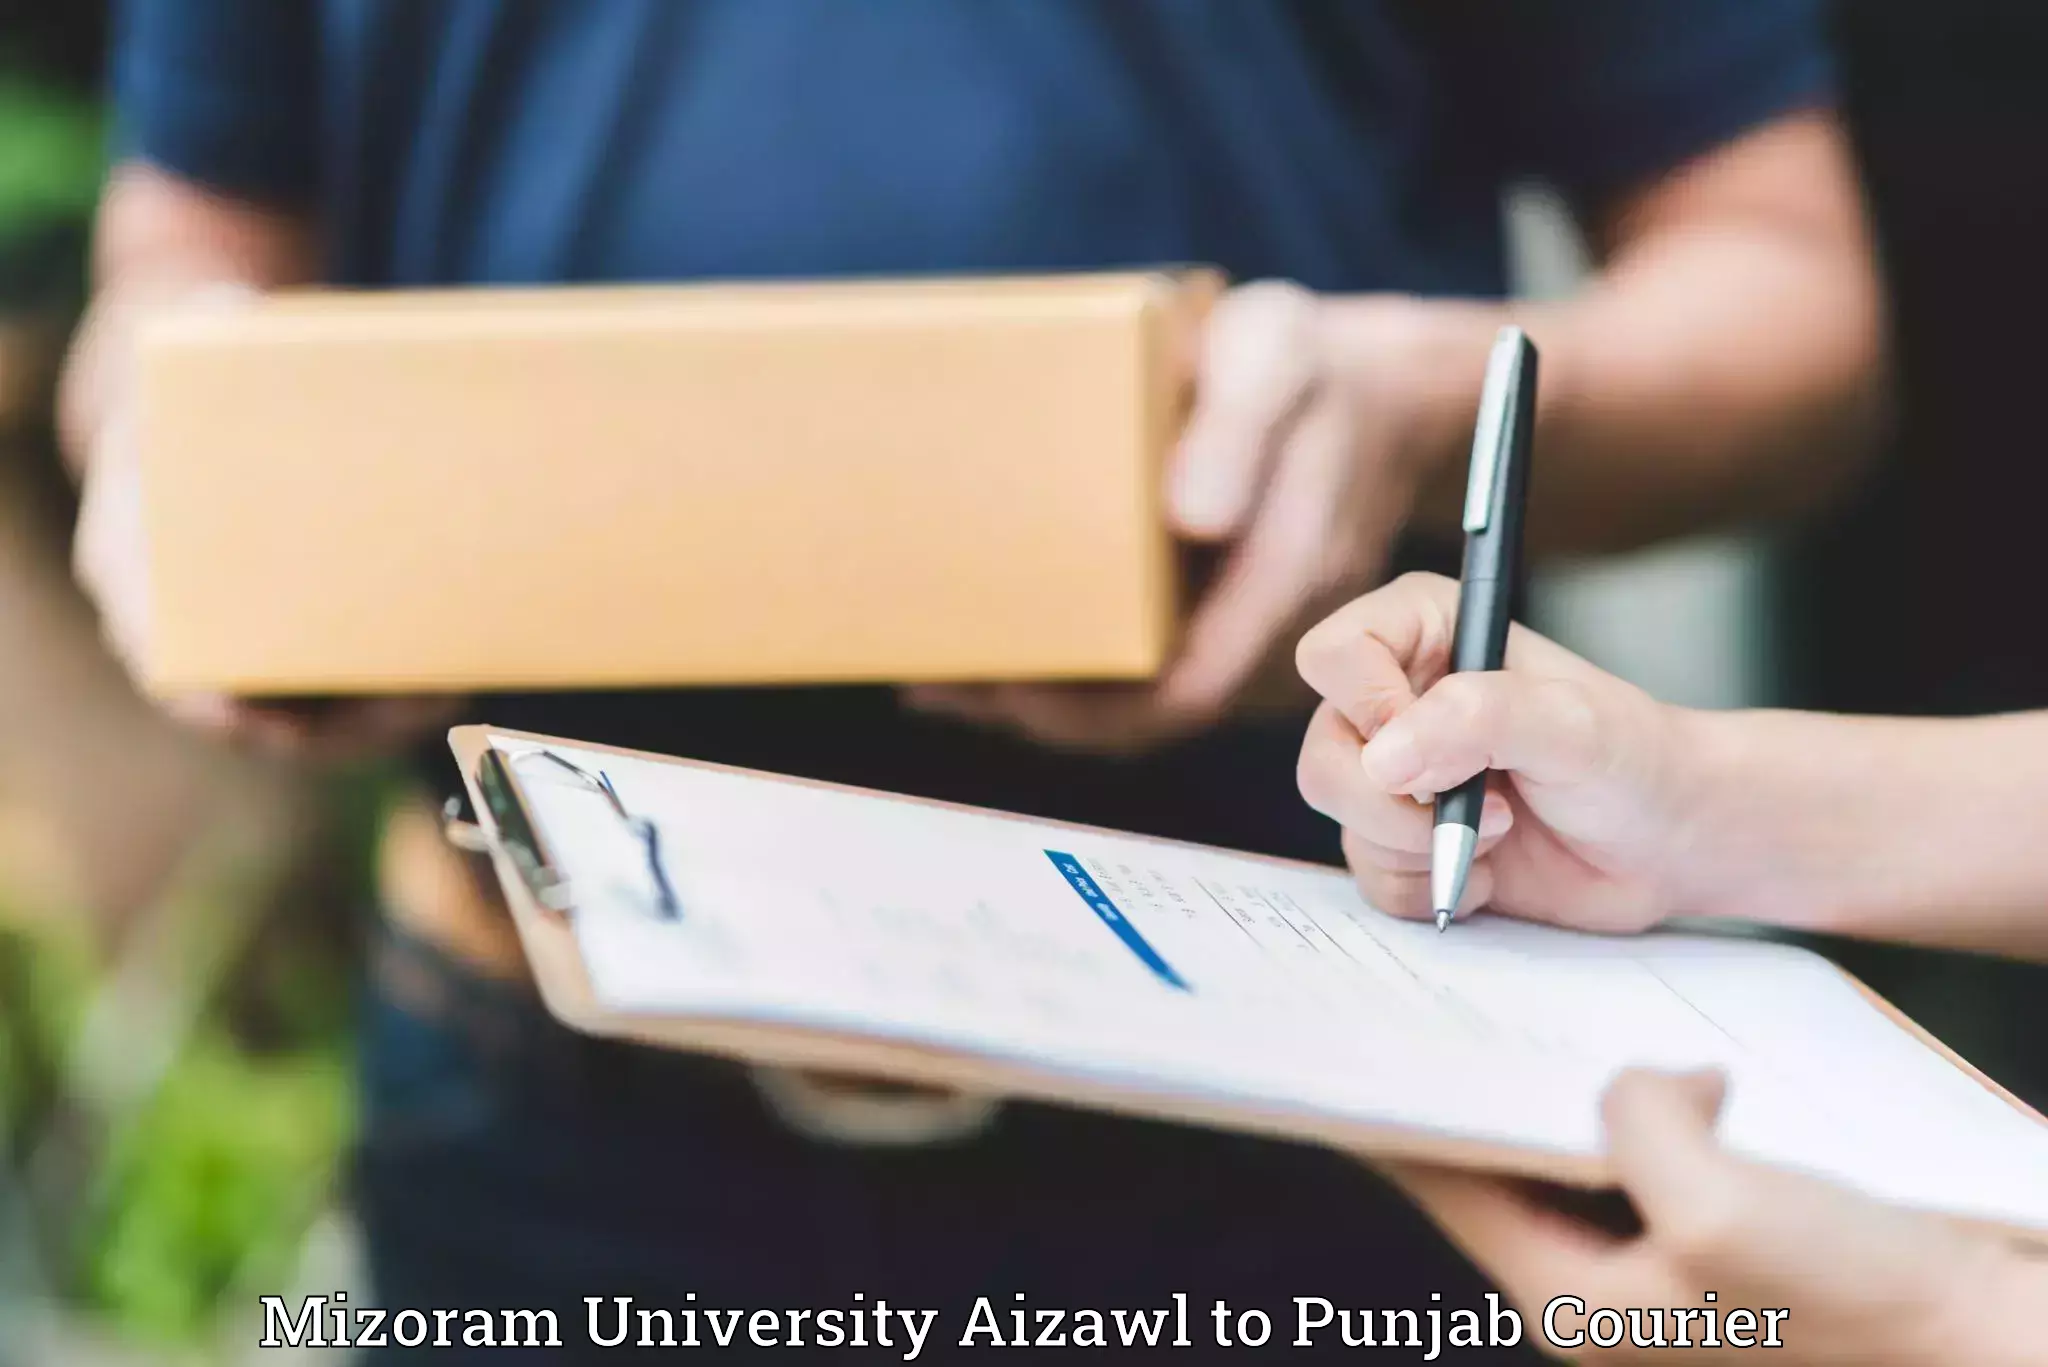 Smooth moving experience Mizoram University Aizawl to Goindwal Sahib